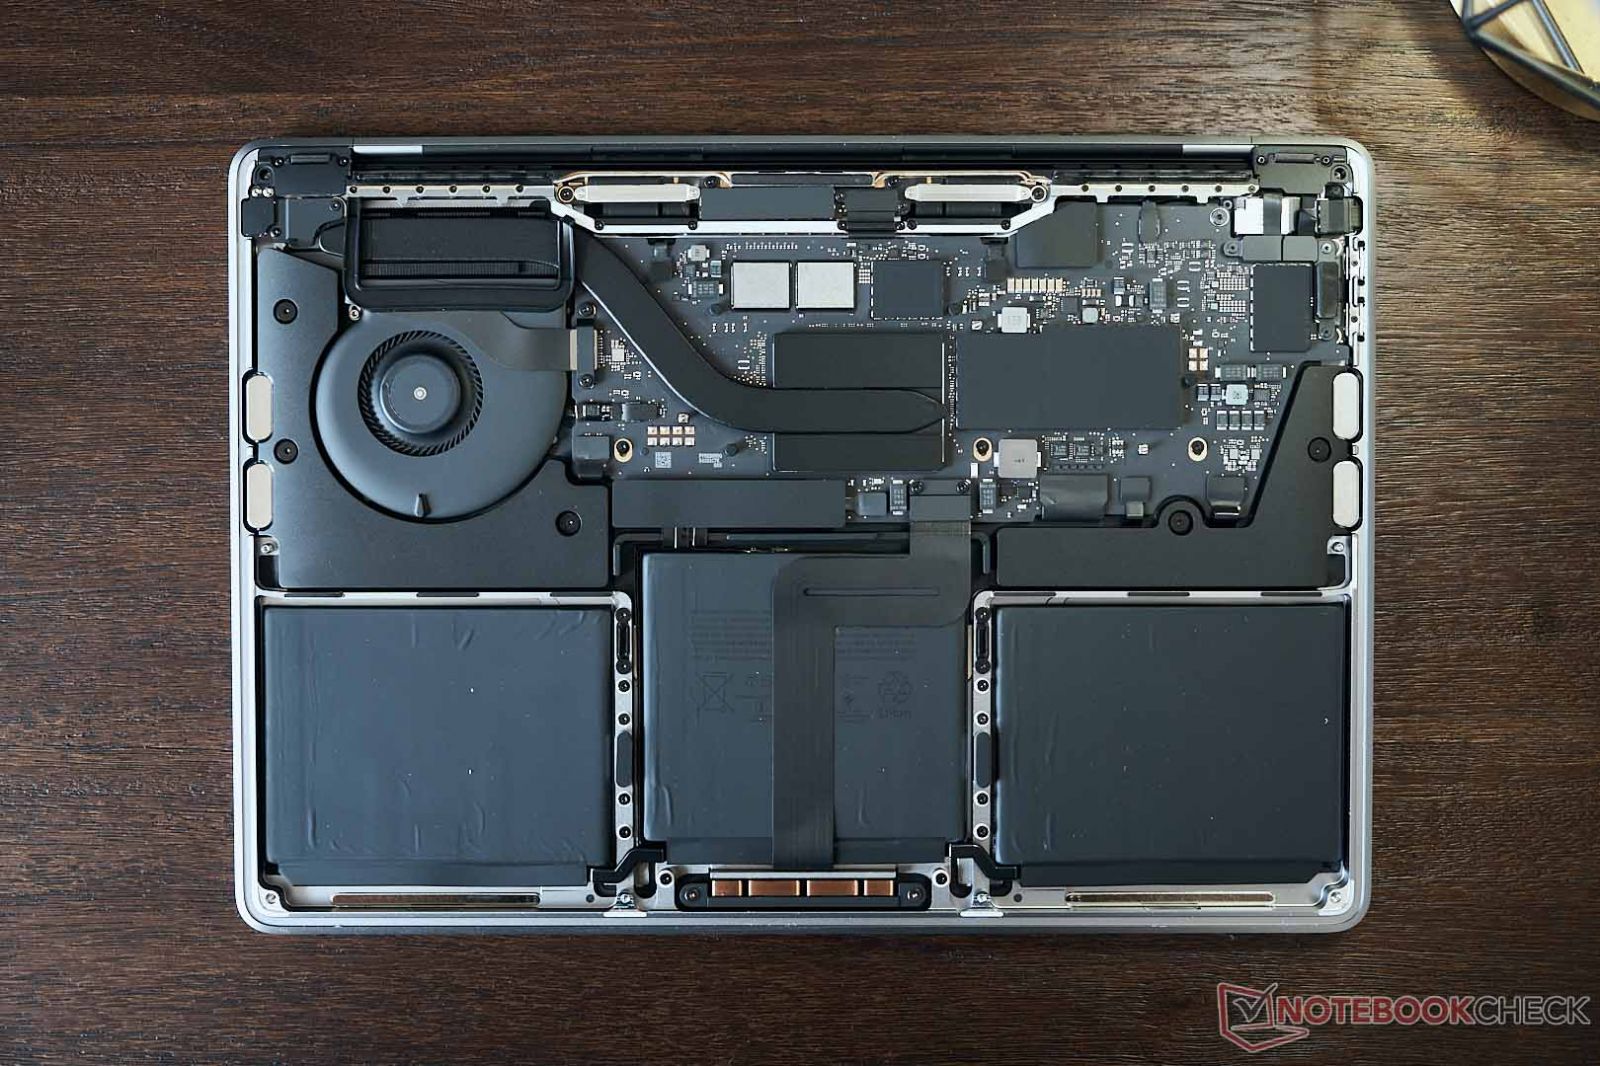 M2-MacBook-Pro-first-look-inside.jpg